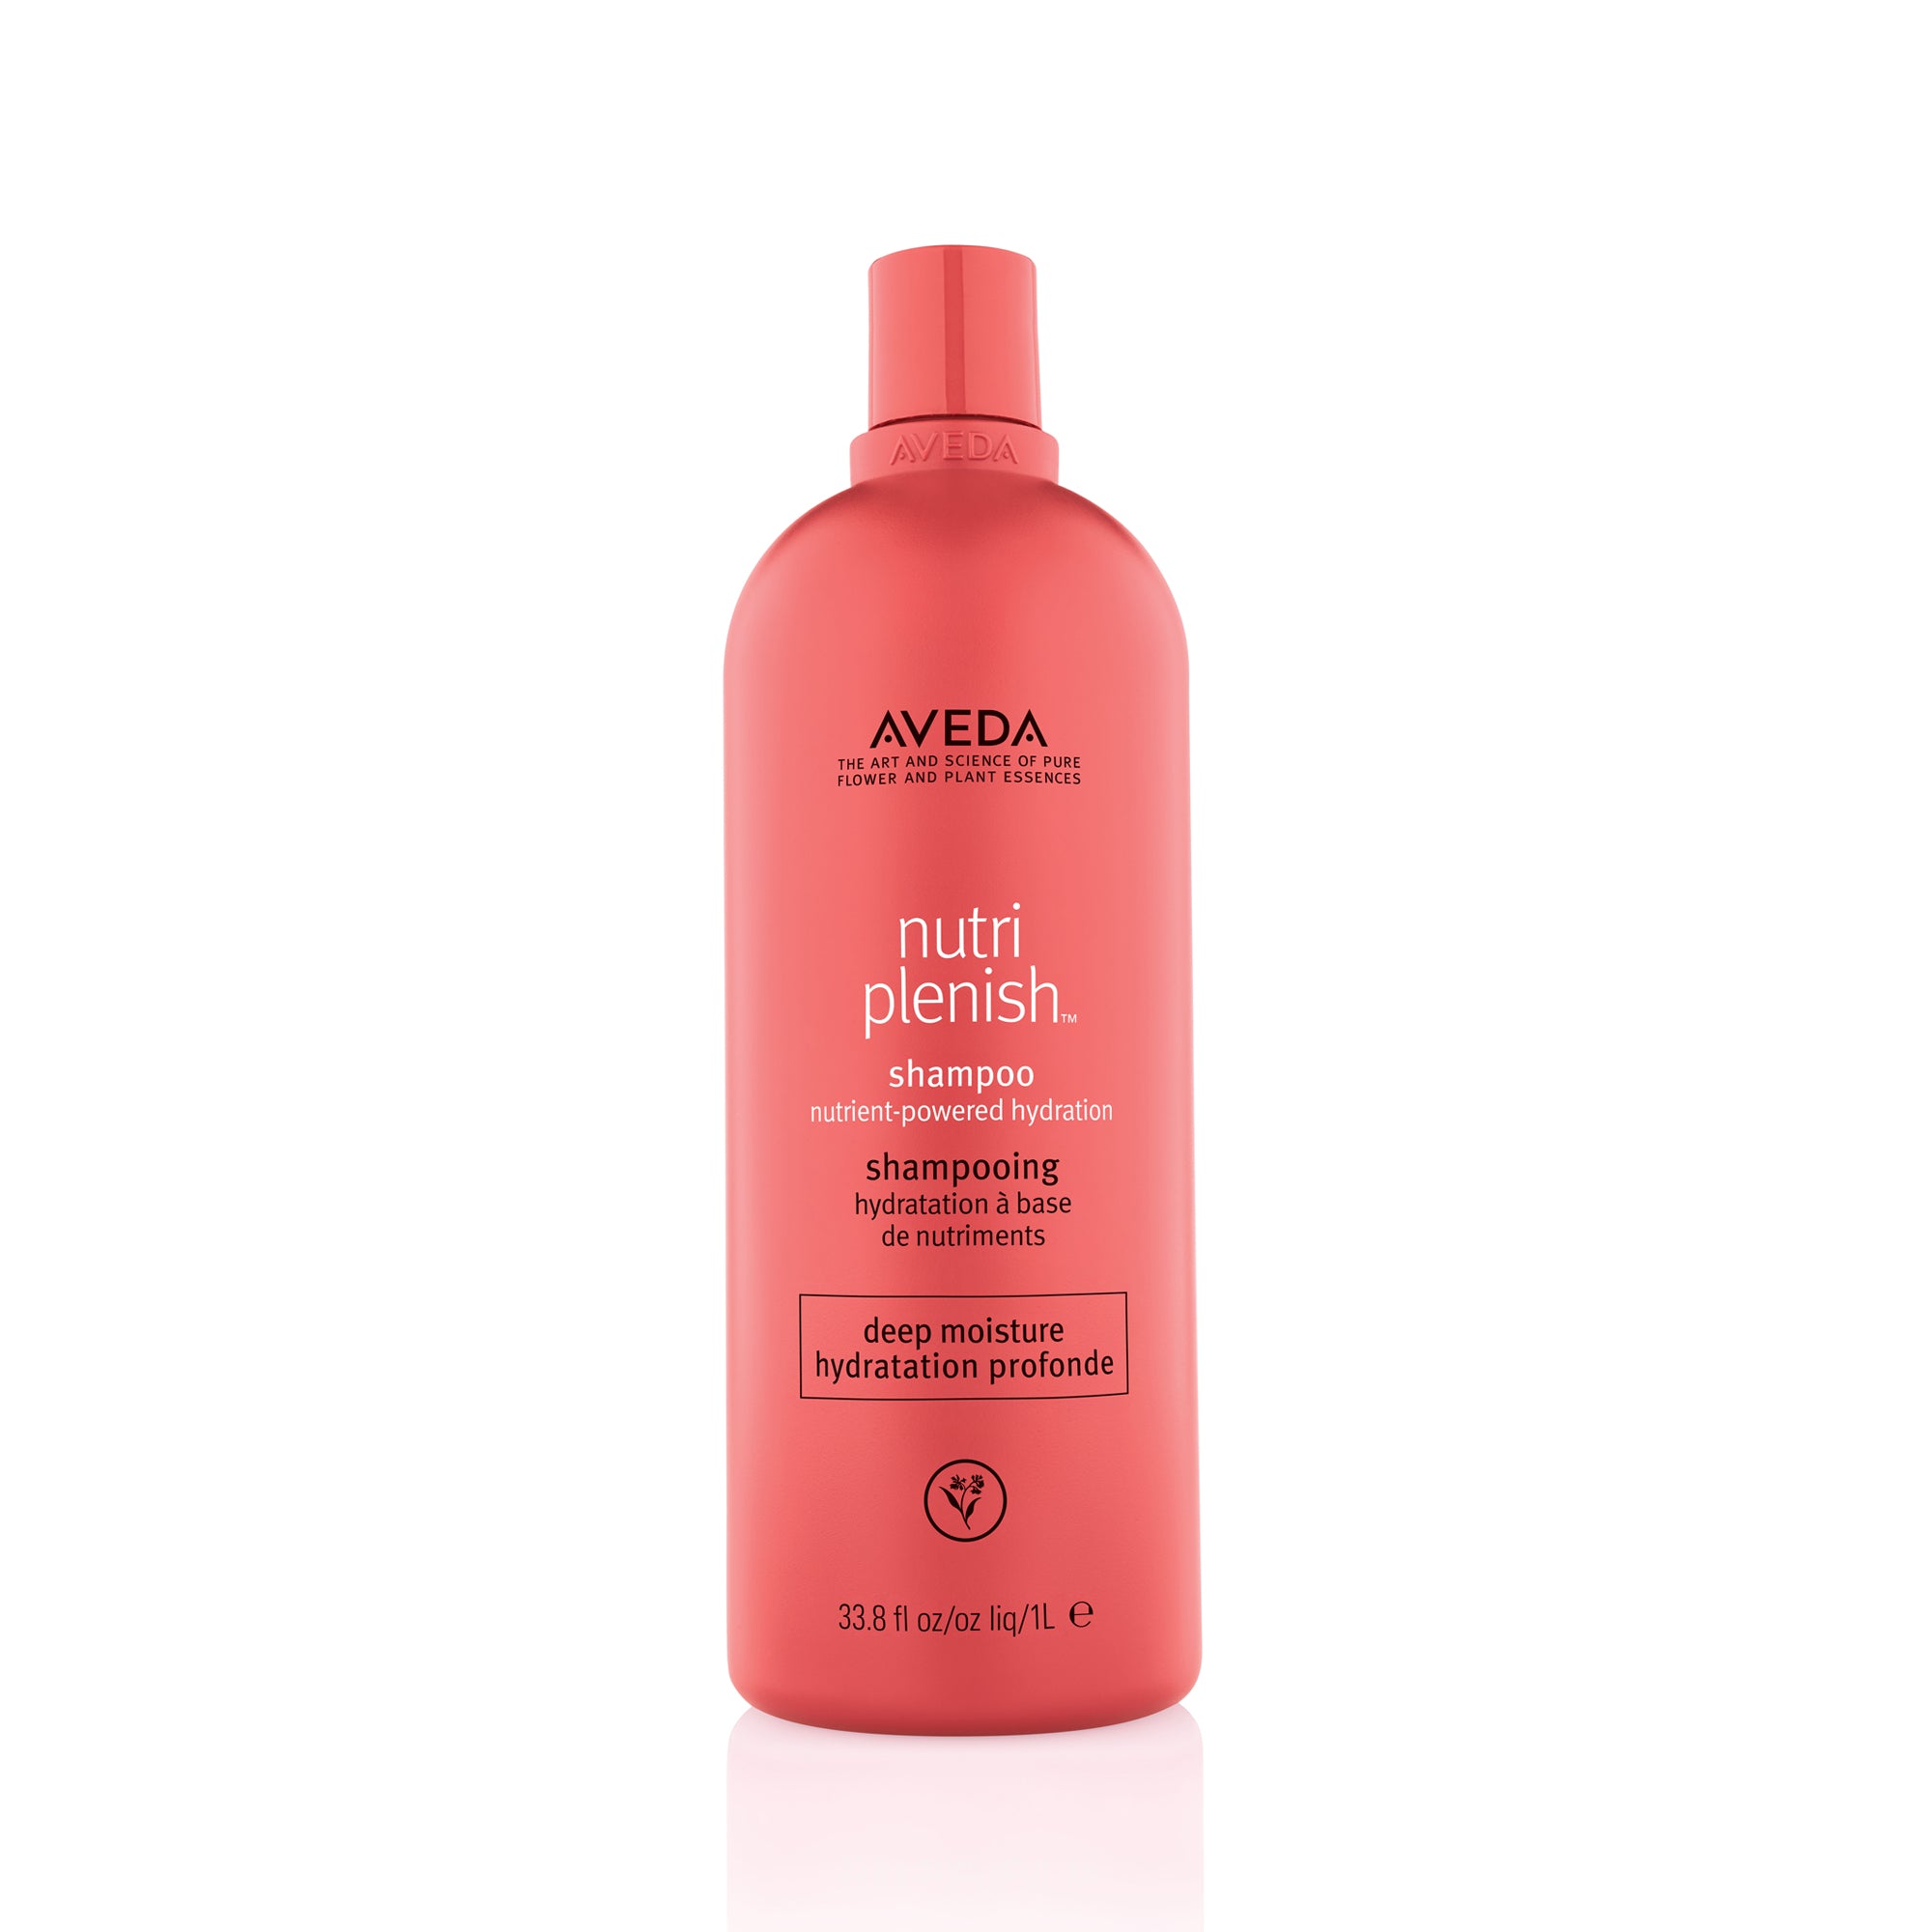 tyngdekraft Uredelighed Brokke sig Aveda | nutriplenish shampoo deep moisture | The Beauty Agenda